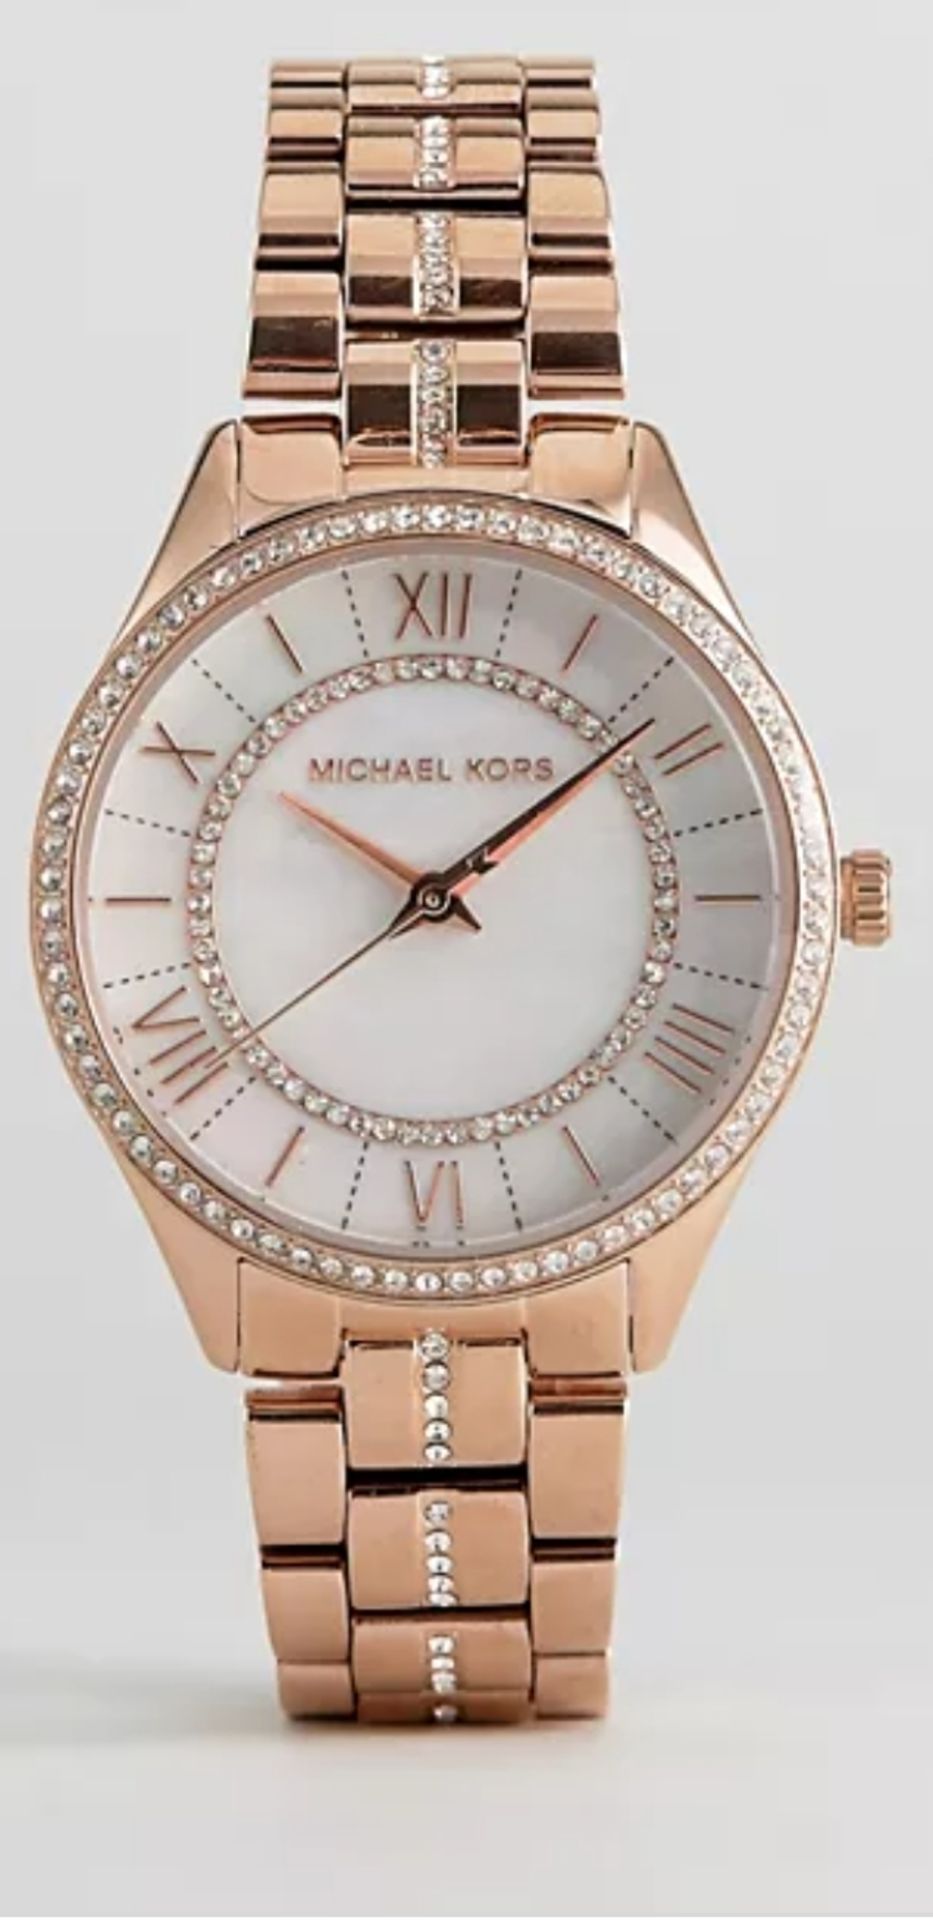 Michael Kors MK3716 Ladies Lauryn Quartz Watch - Image 3 of 6